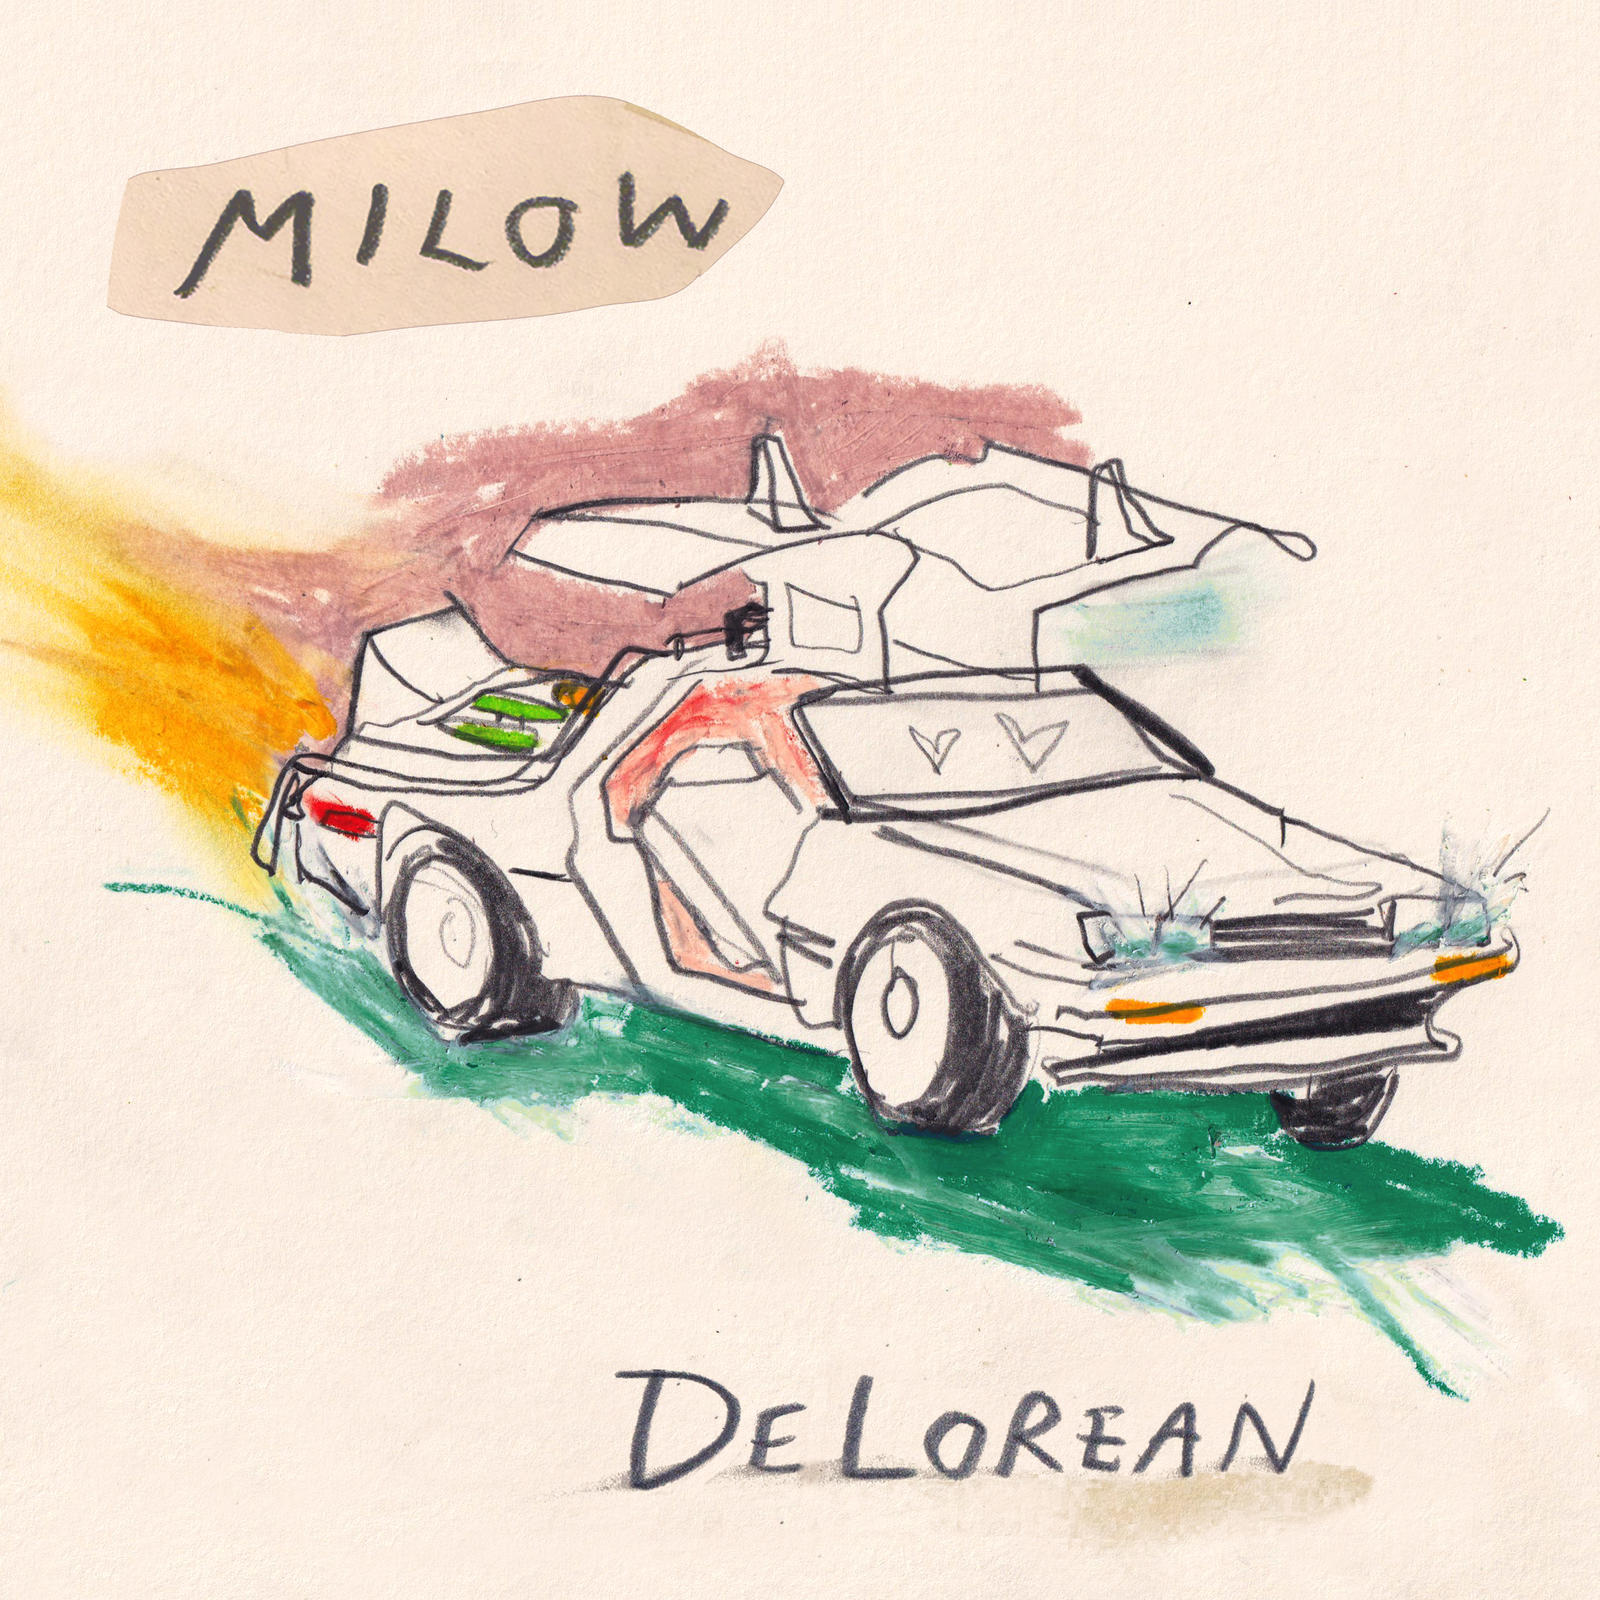 Milow - DeLorean